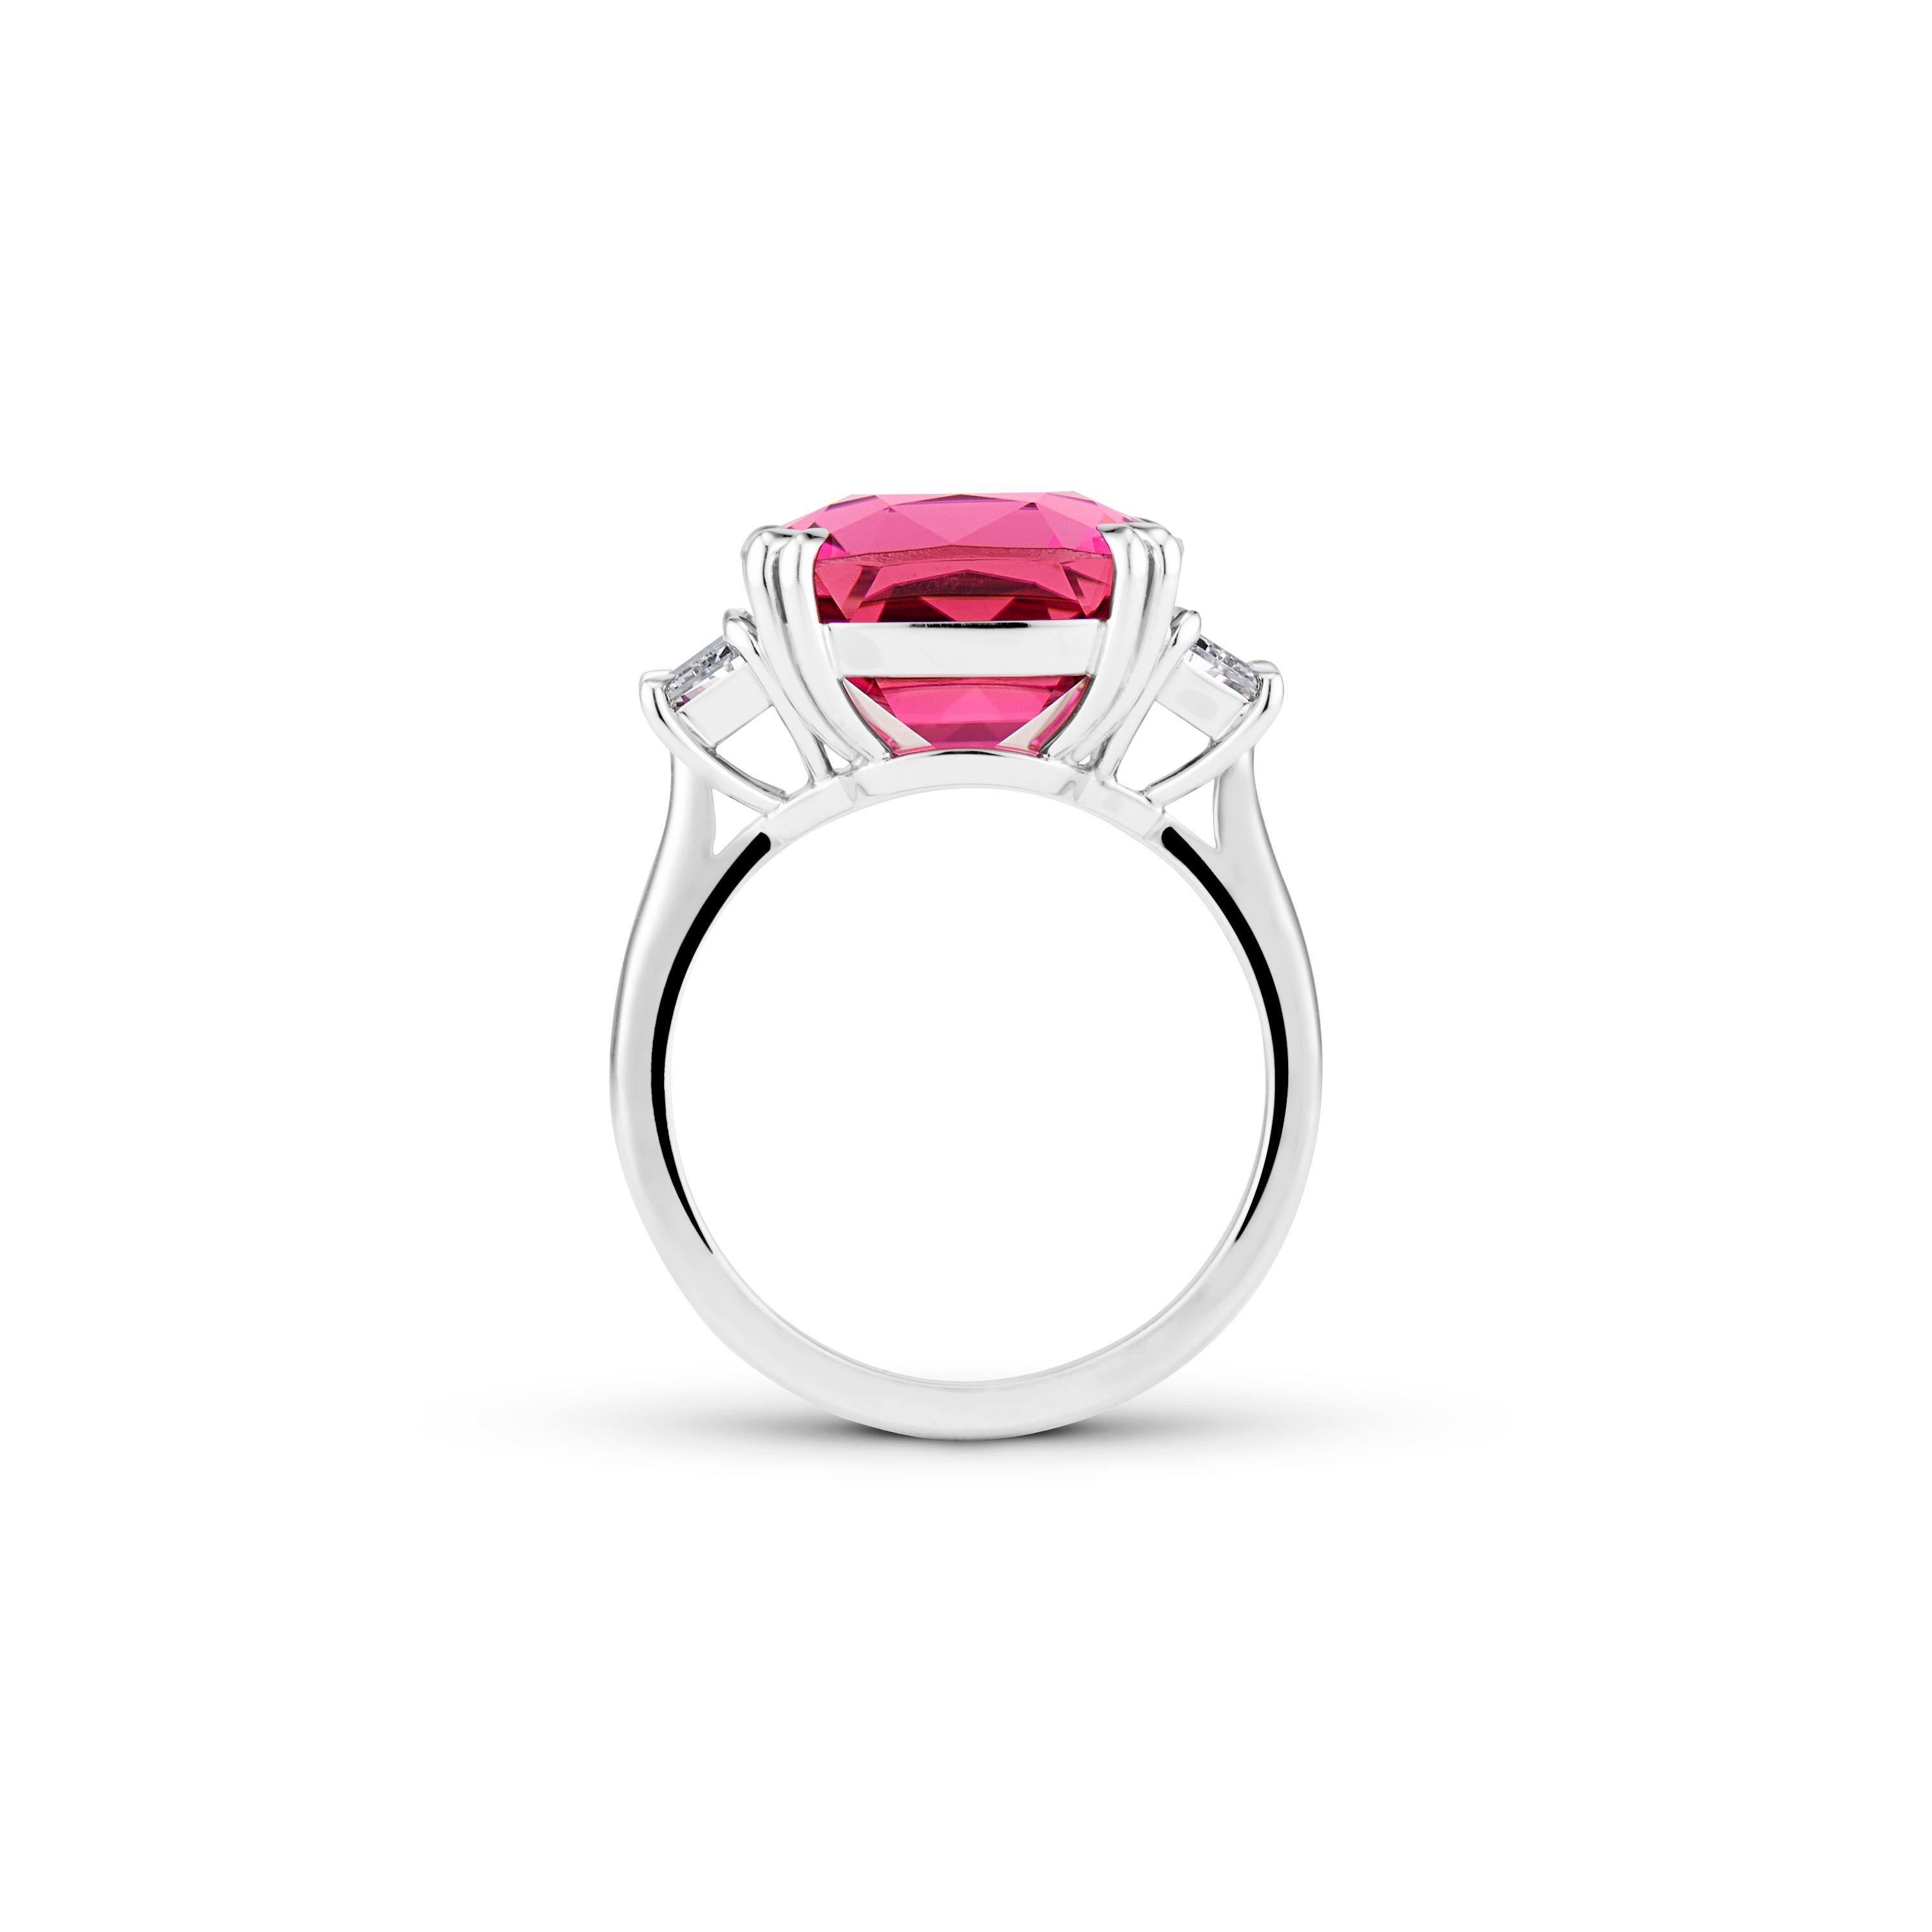 7.7 carat diamond ring